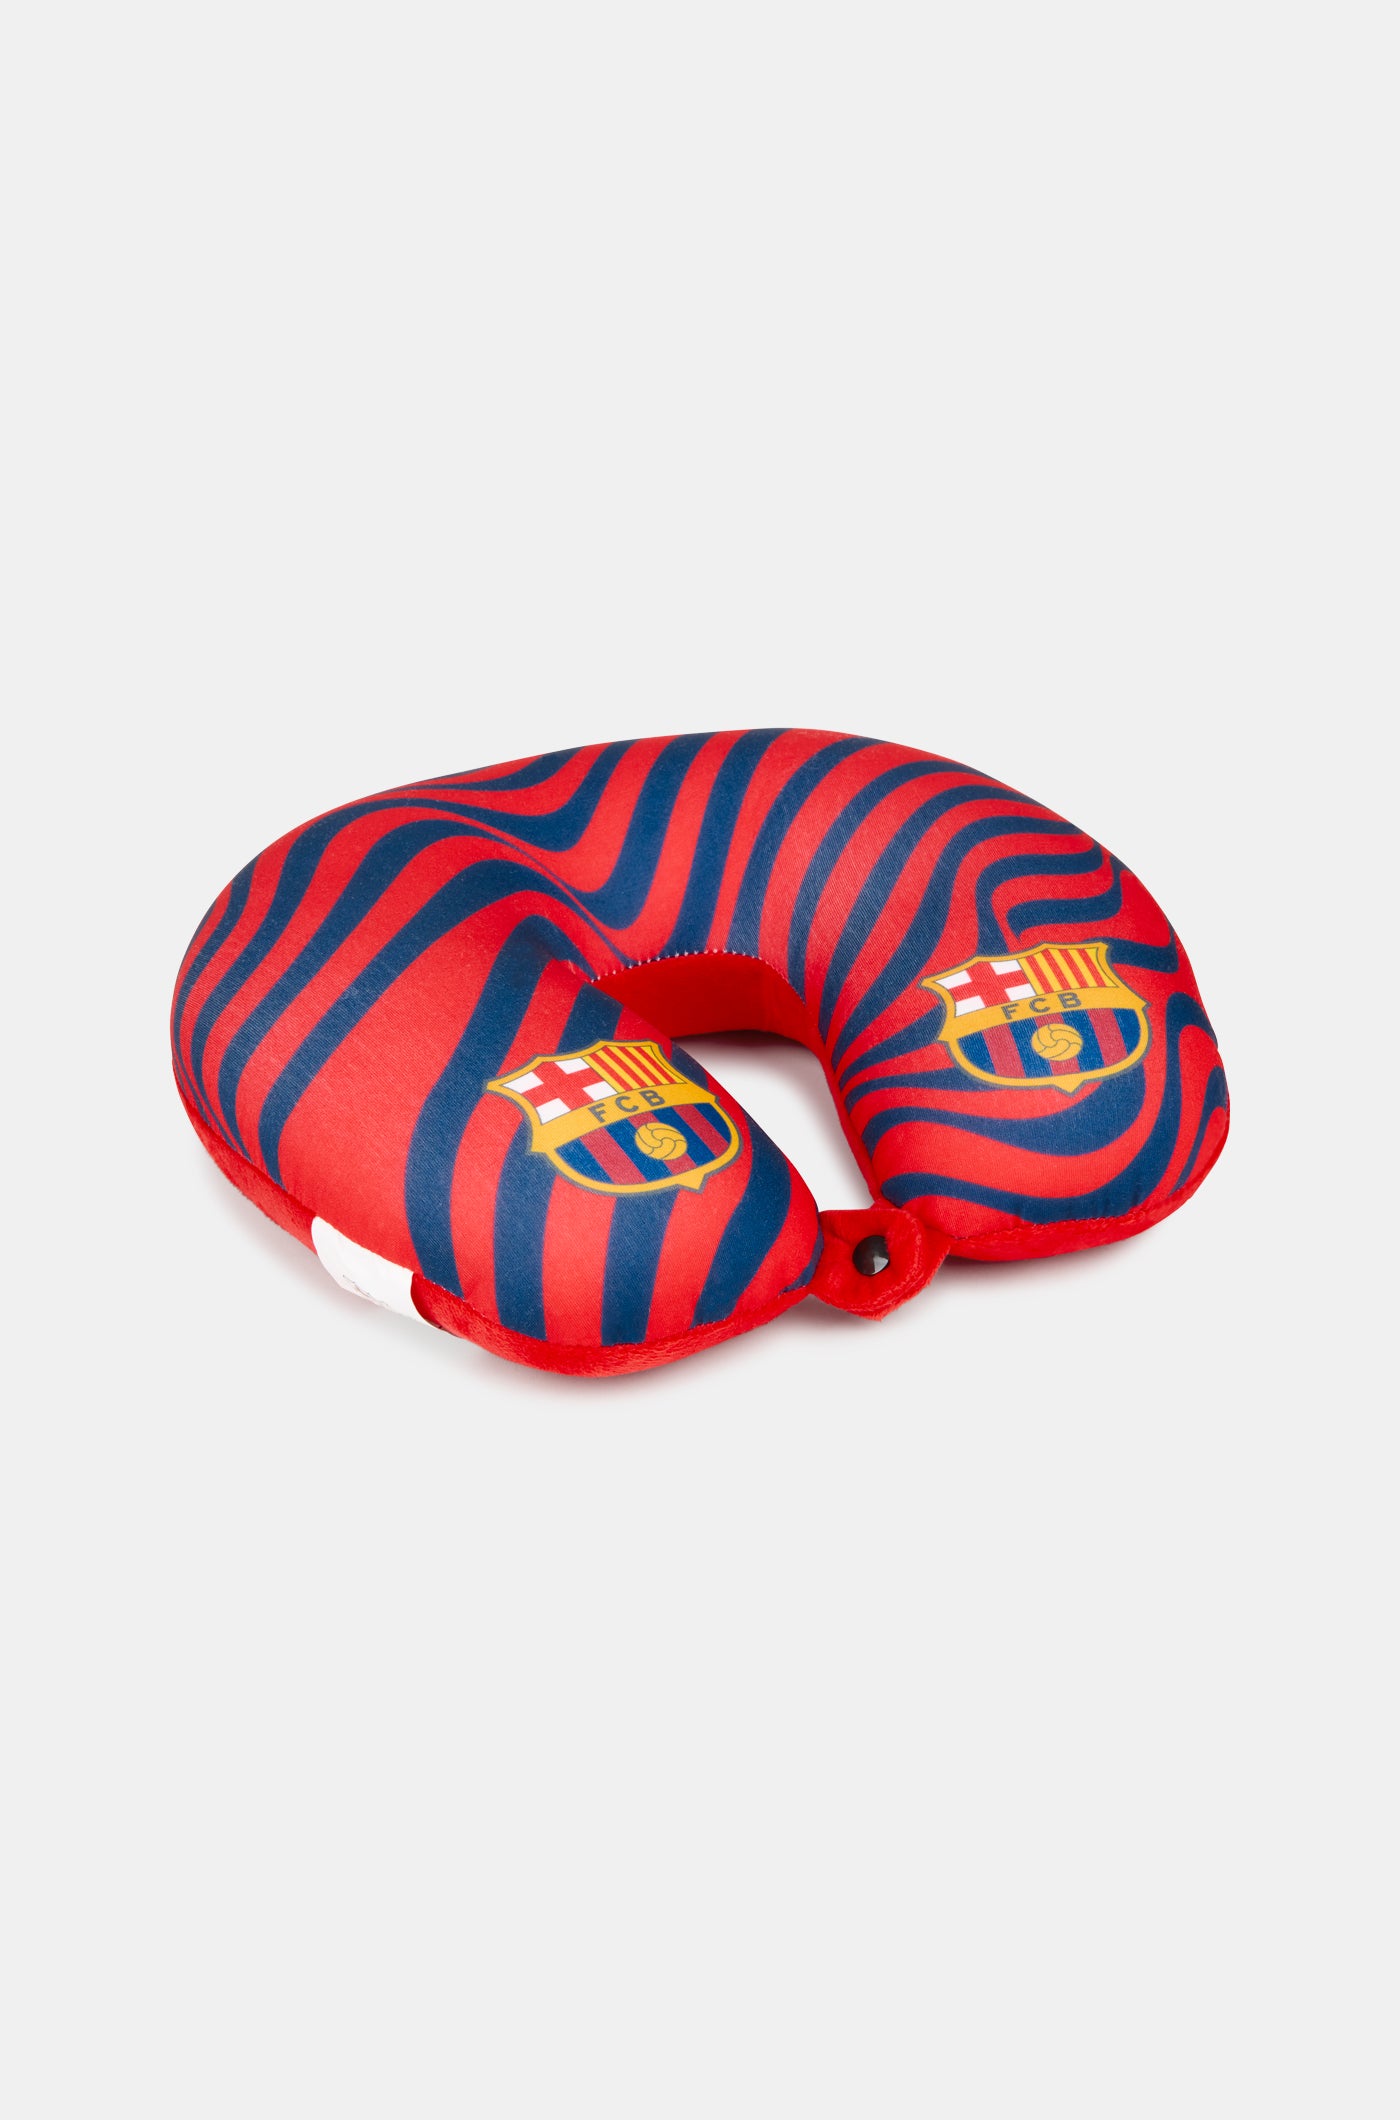 Oreiller cervical "Swirl" FC Barcelone